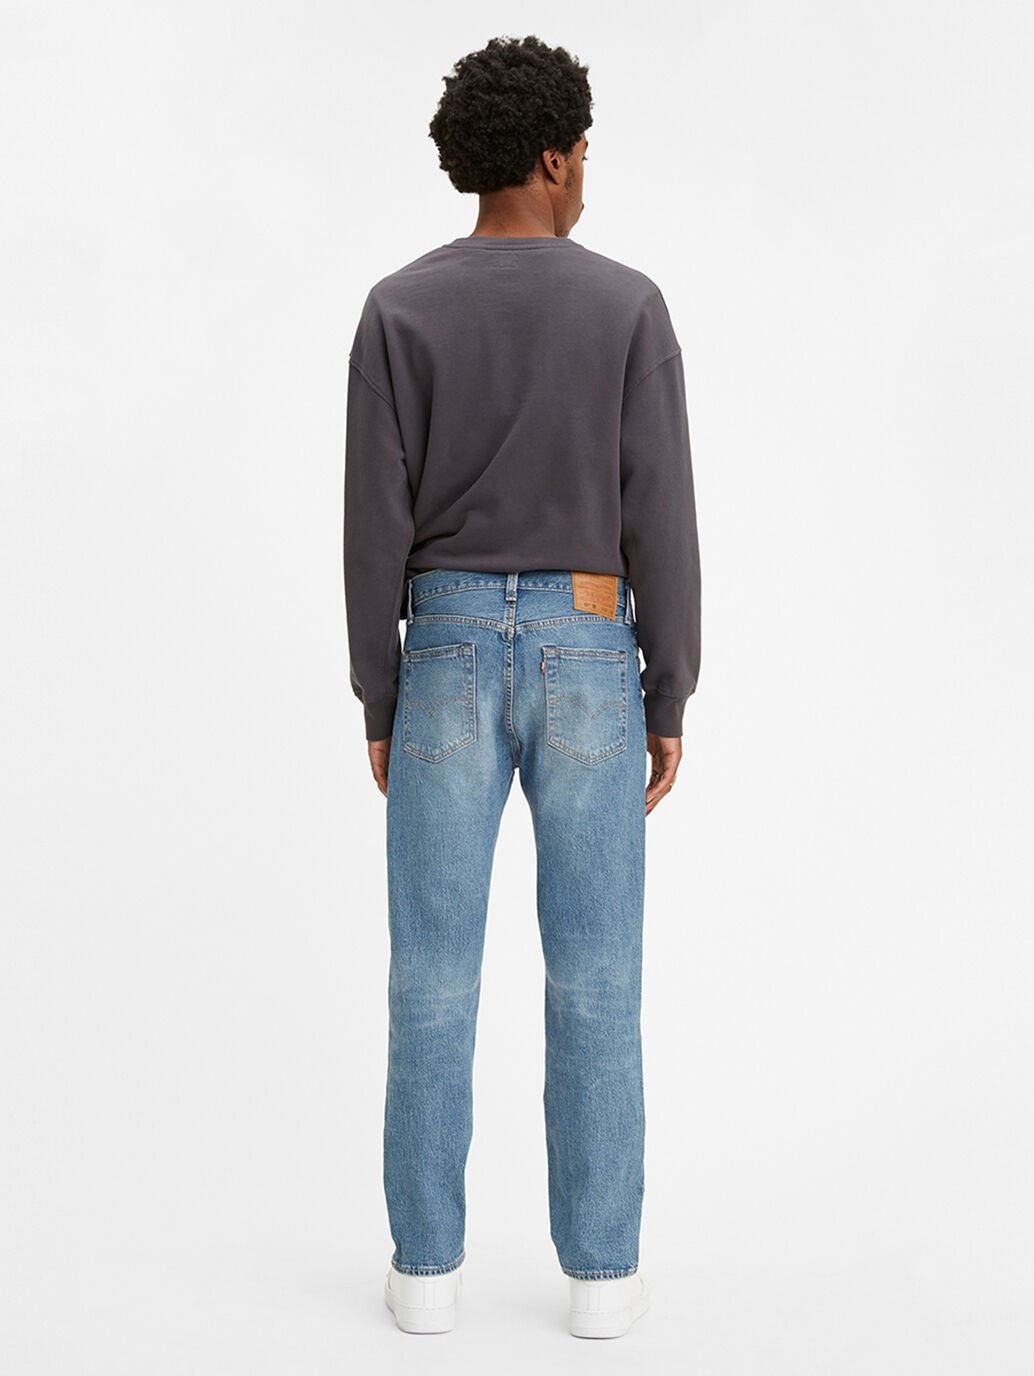 levis jeans 501 straight leg